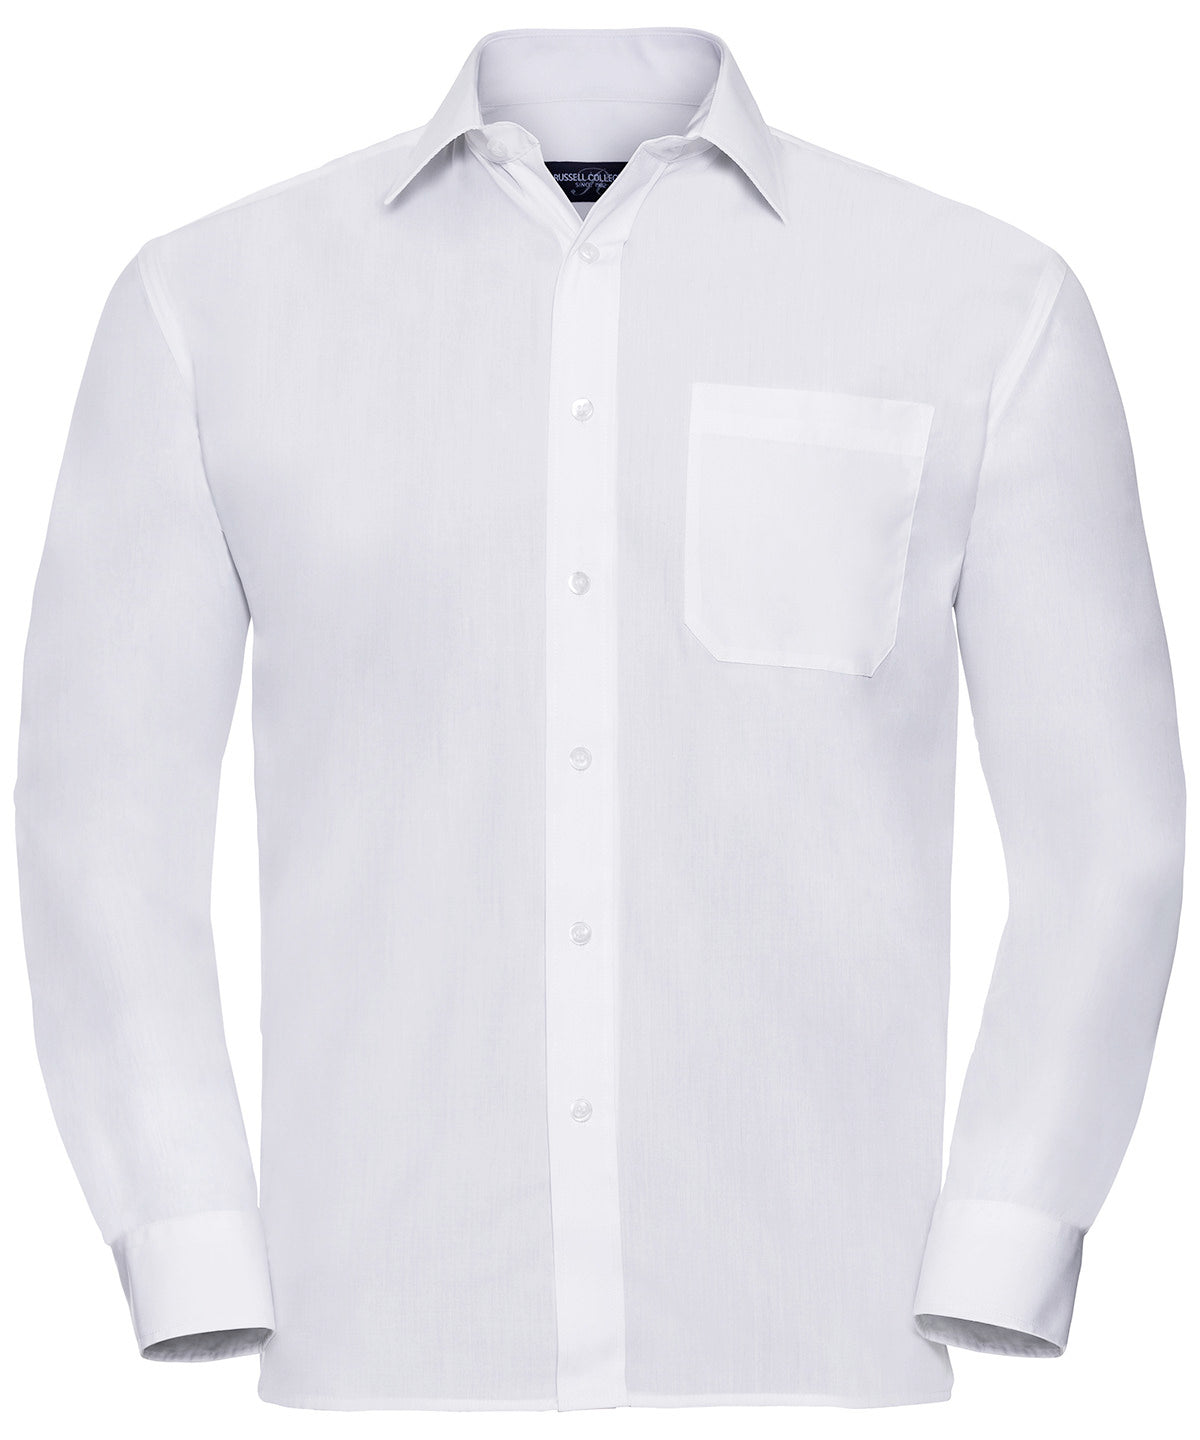 Bolir - Long Sleeve Polycotton Easycare Poplin Shirt